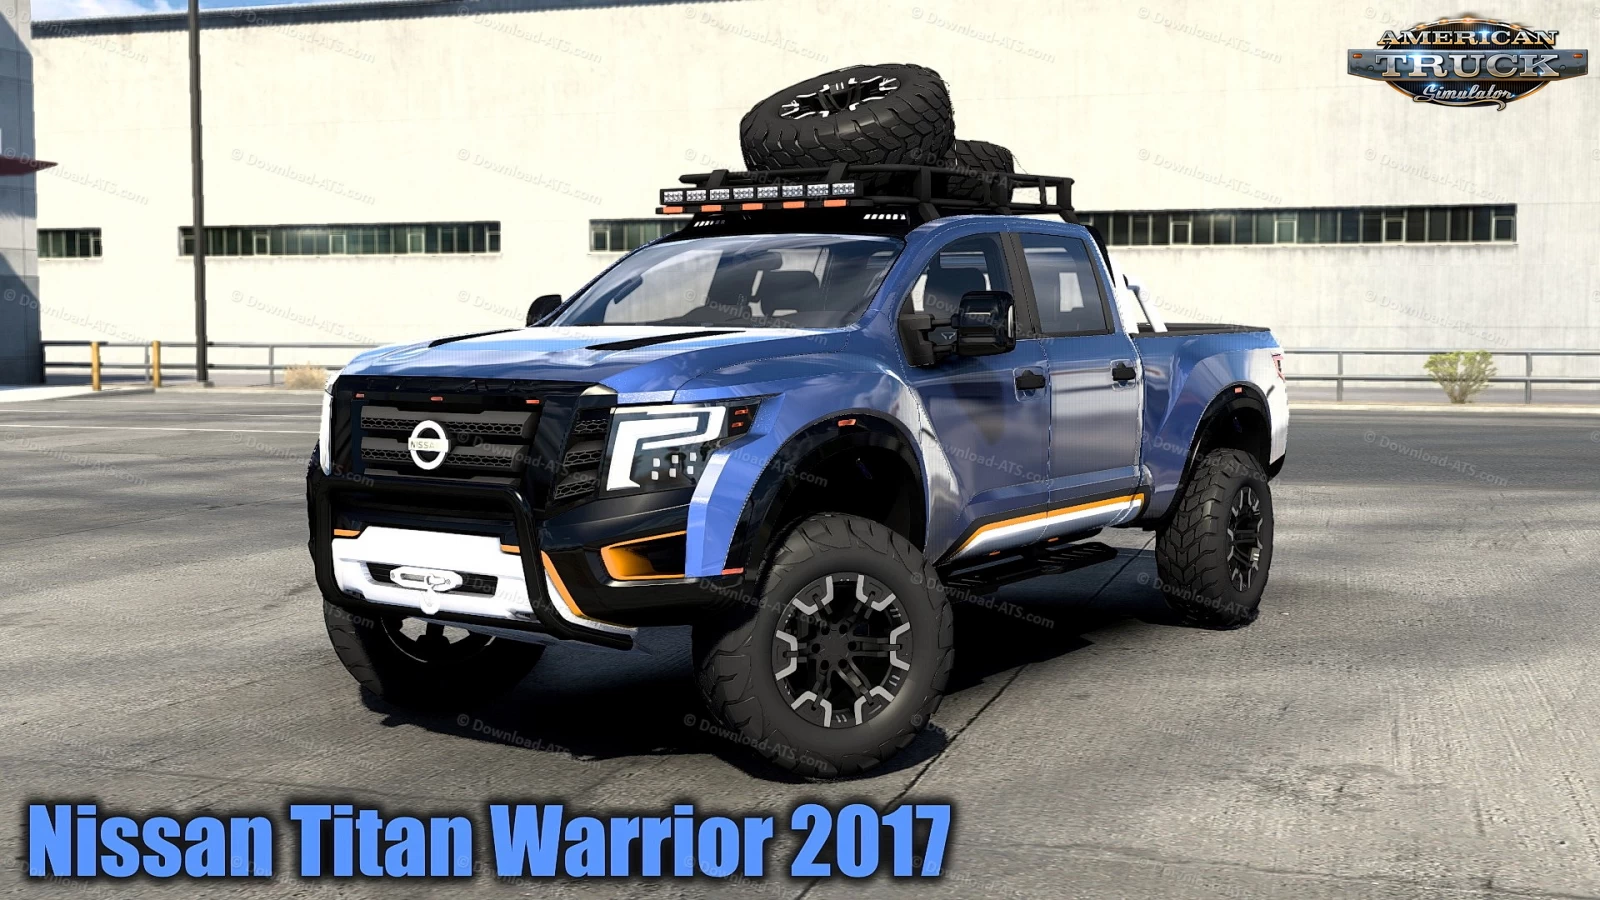 Nissan Titan Warrior 2017 + Interior v1.1 (1.43.x) for ATS